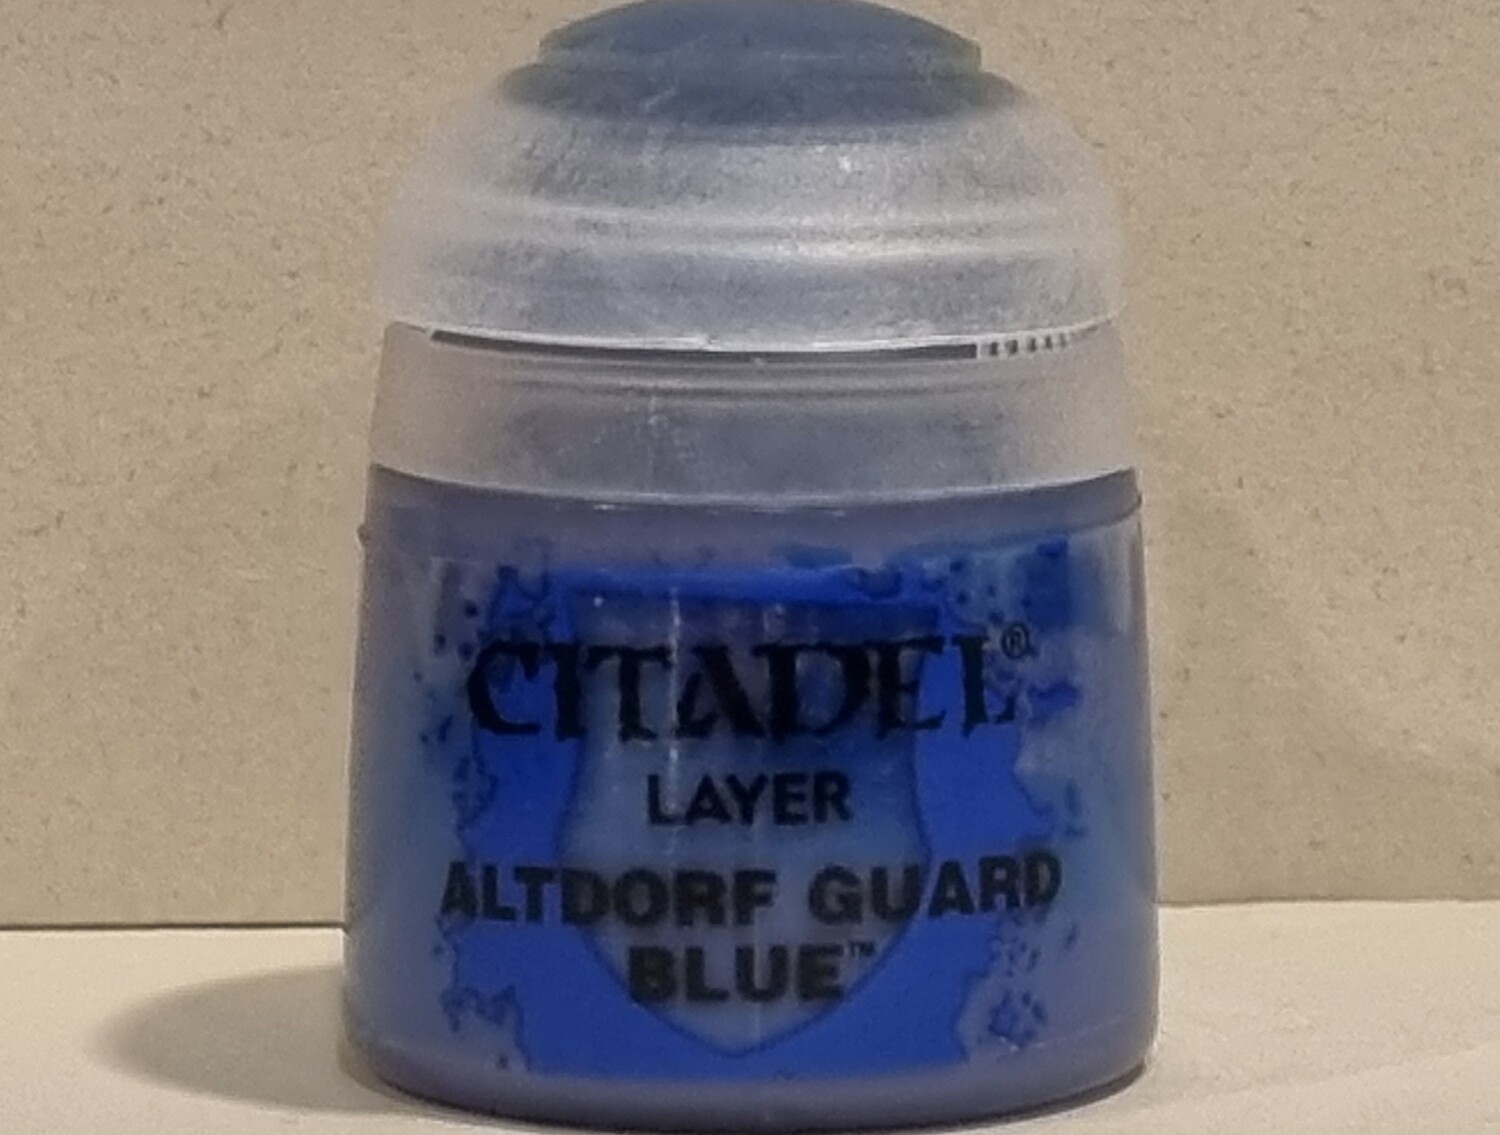 Citadel, Paint, Layer, Altdorf Guard Blue, 12ml, 22-15